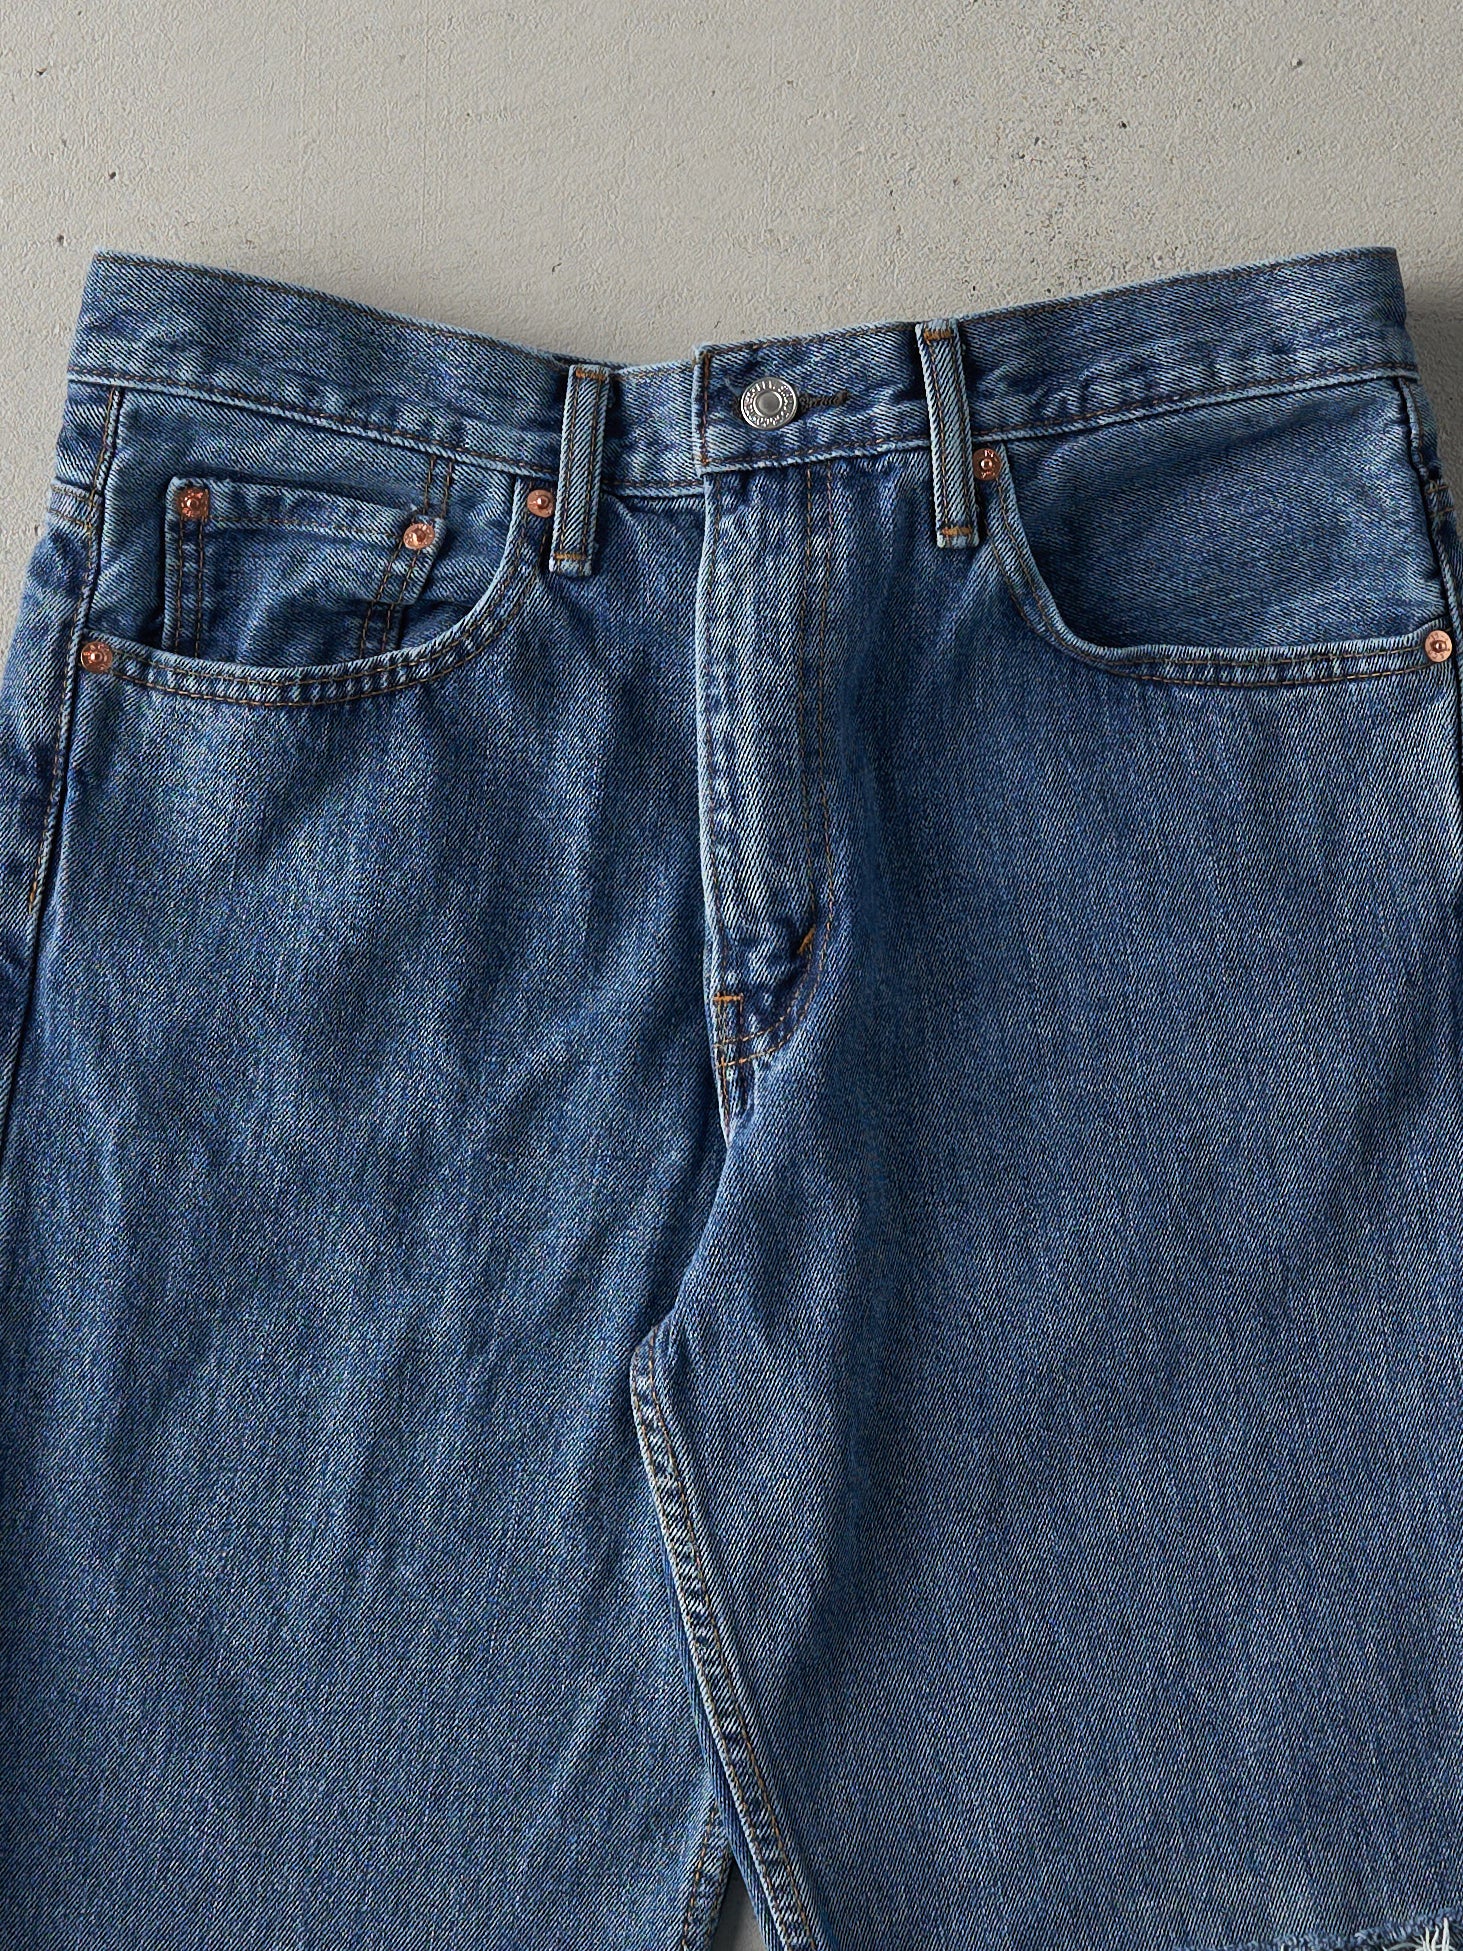 Vintage Y2K Mid Wash Levi's 516 Cut Off Jean Shorts (33x9)